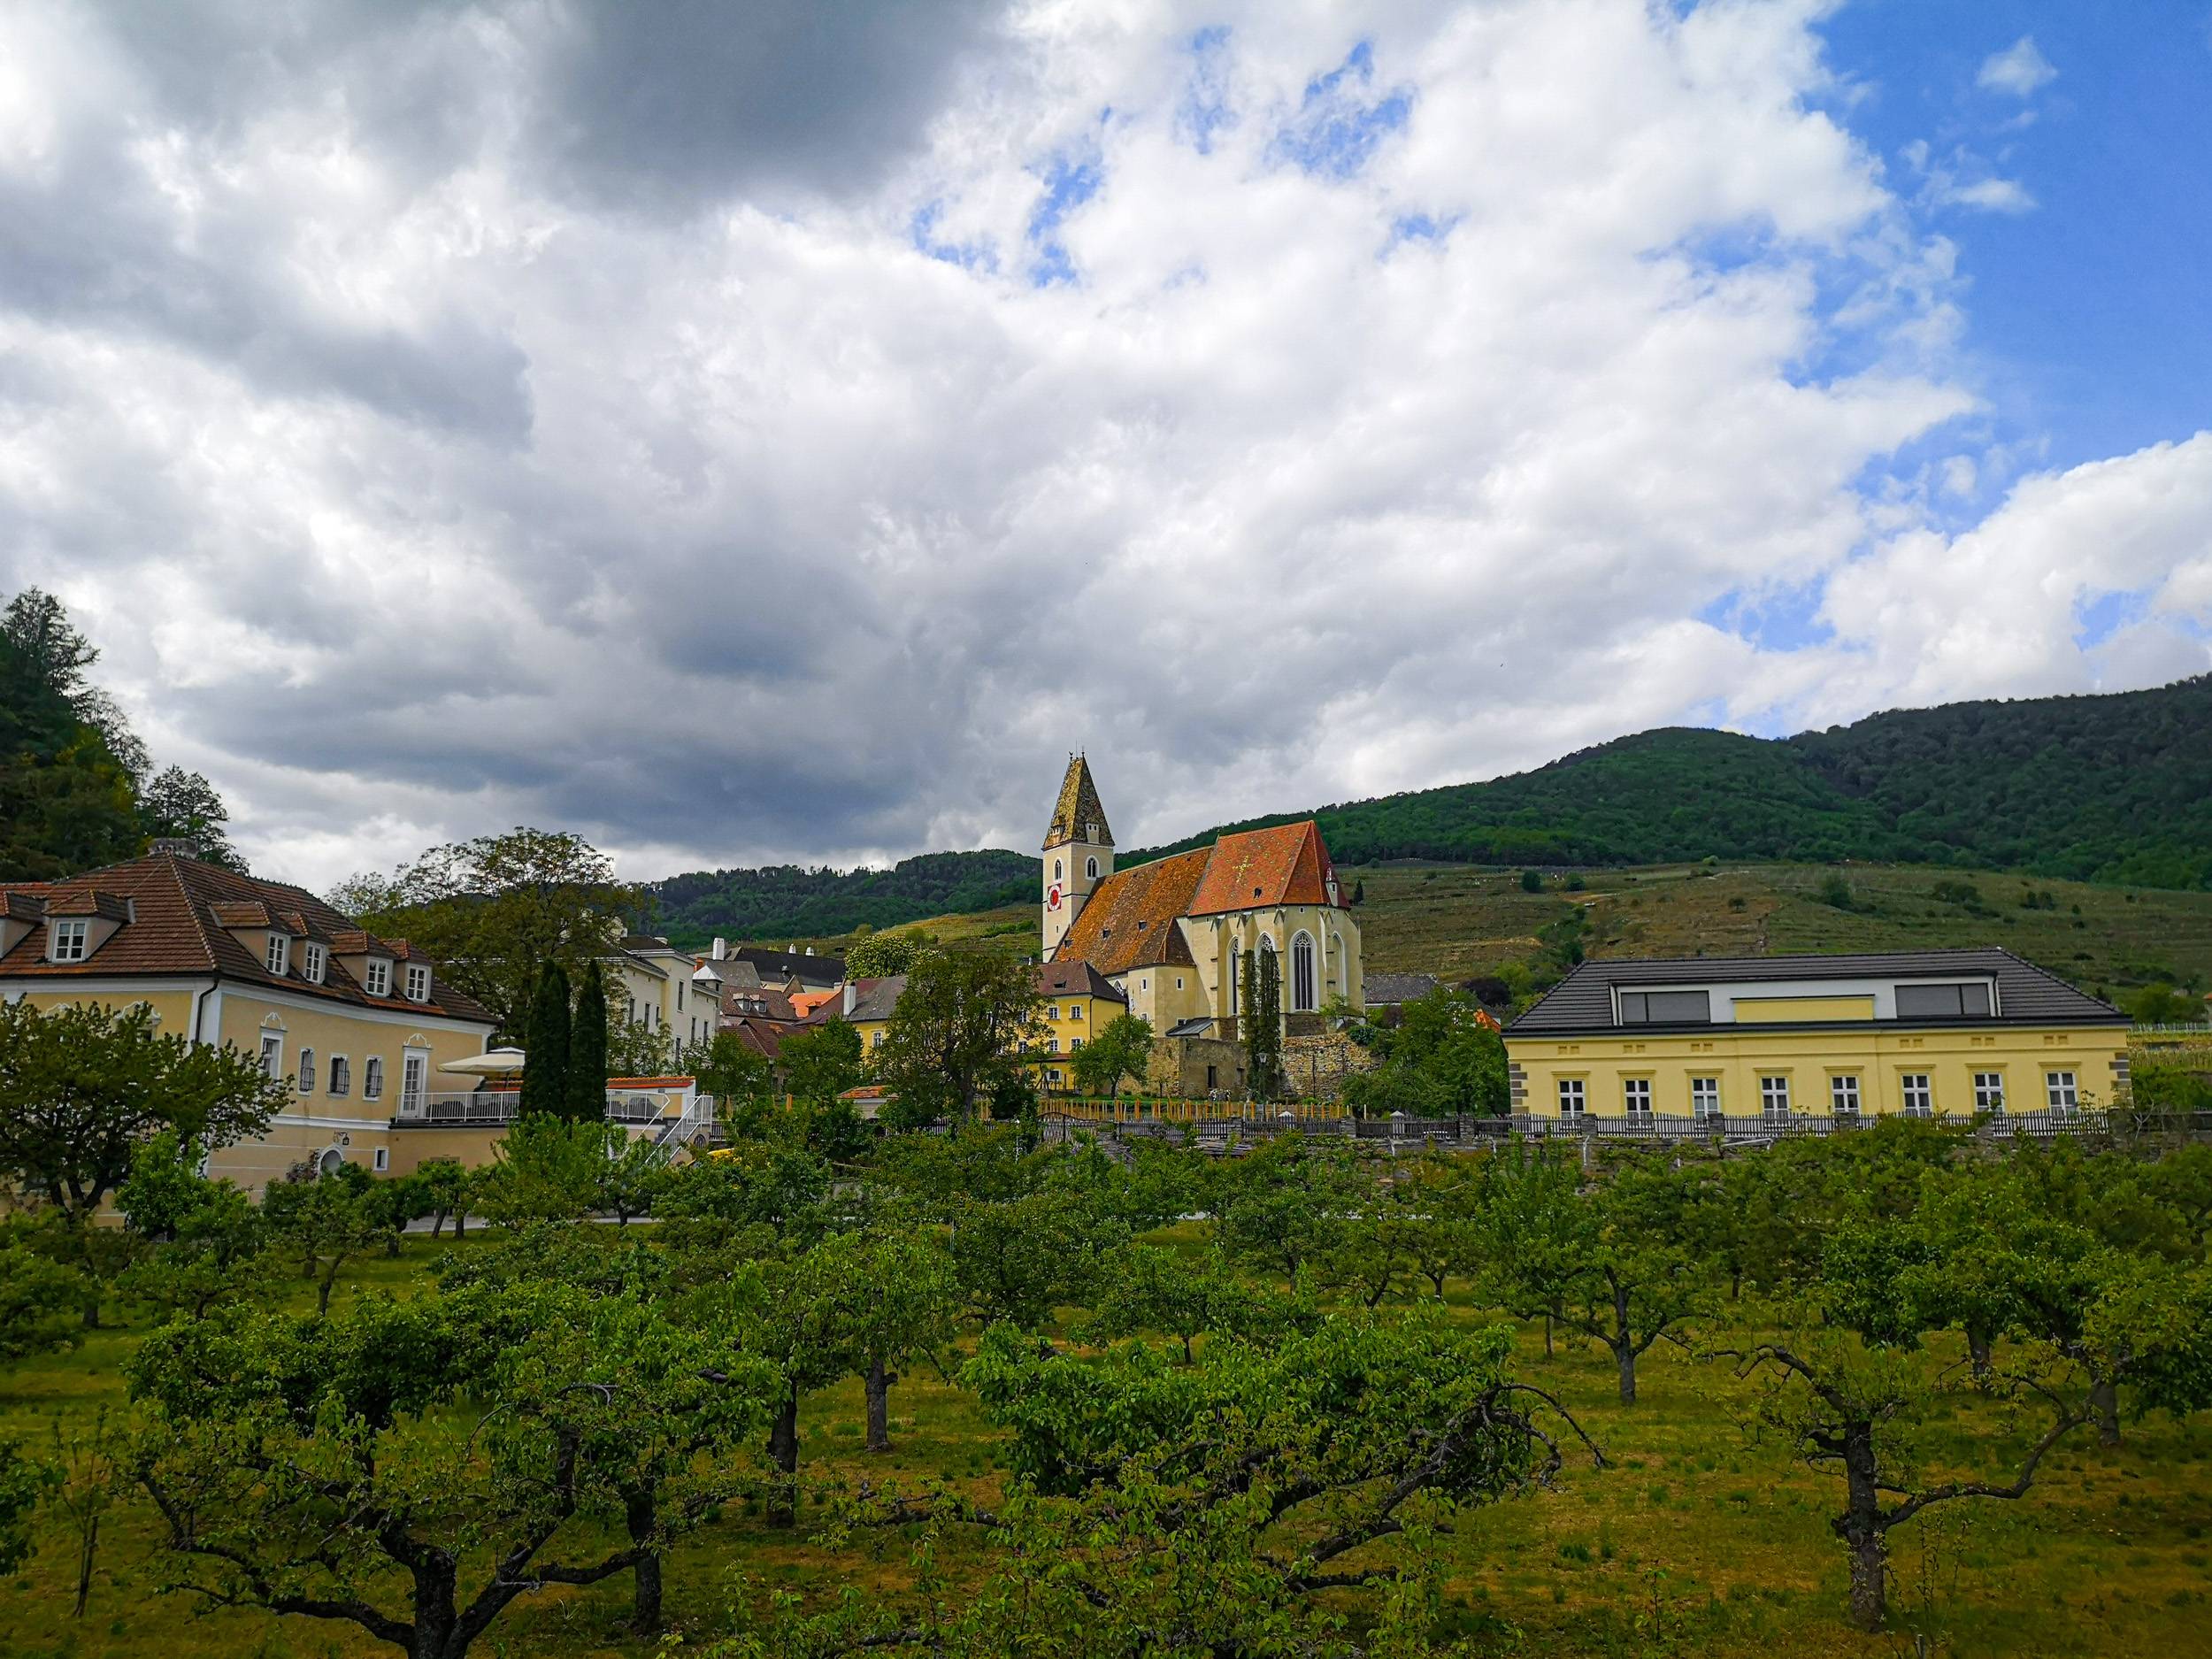 The vineyards of Spitz and its church in Wachau, Austria